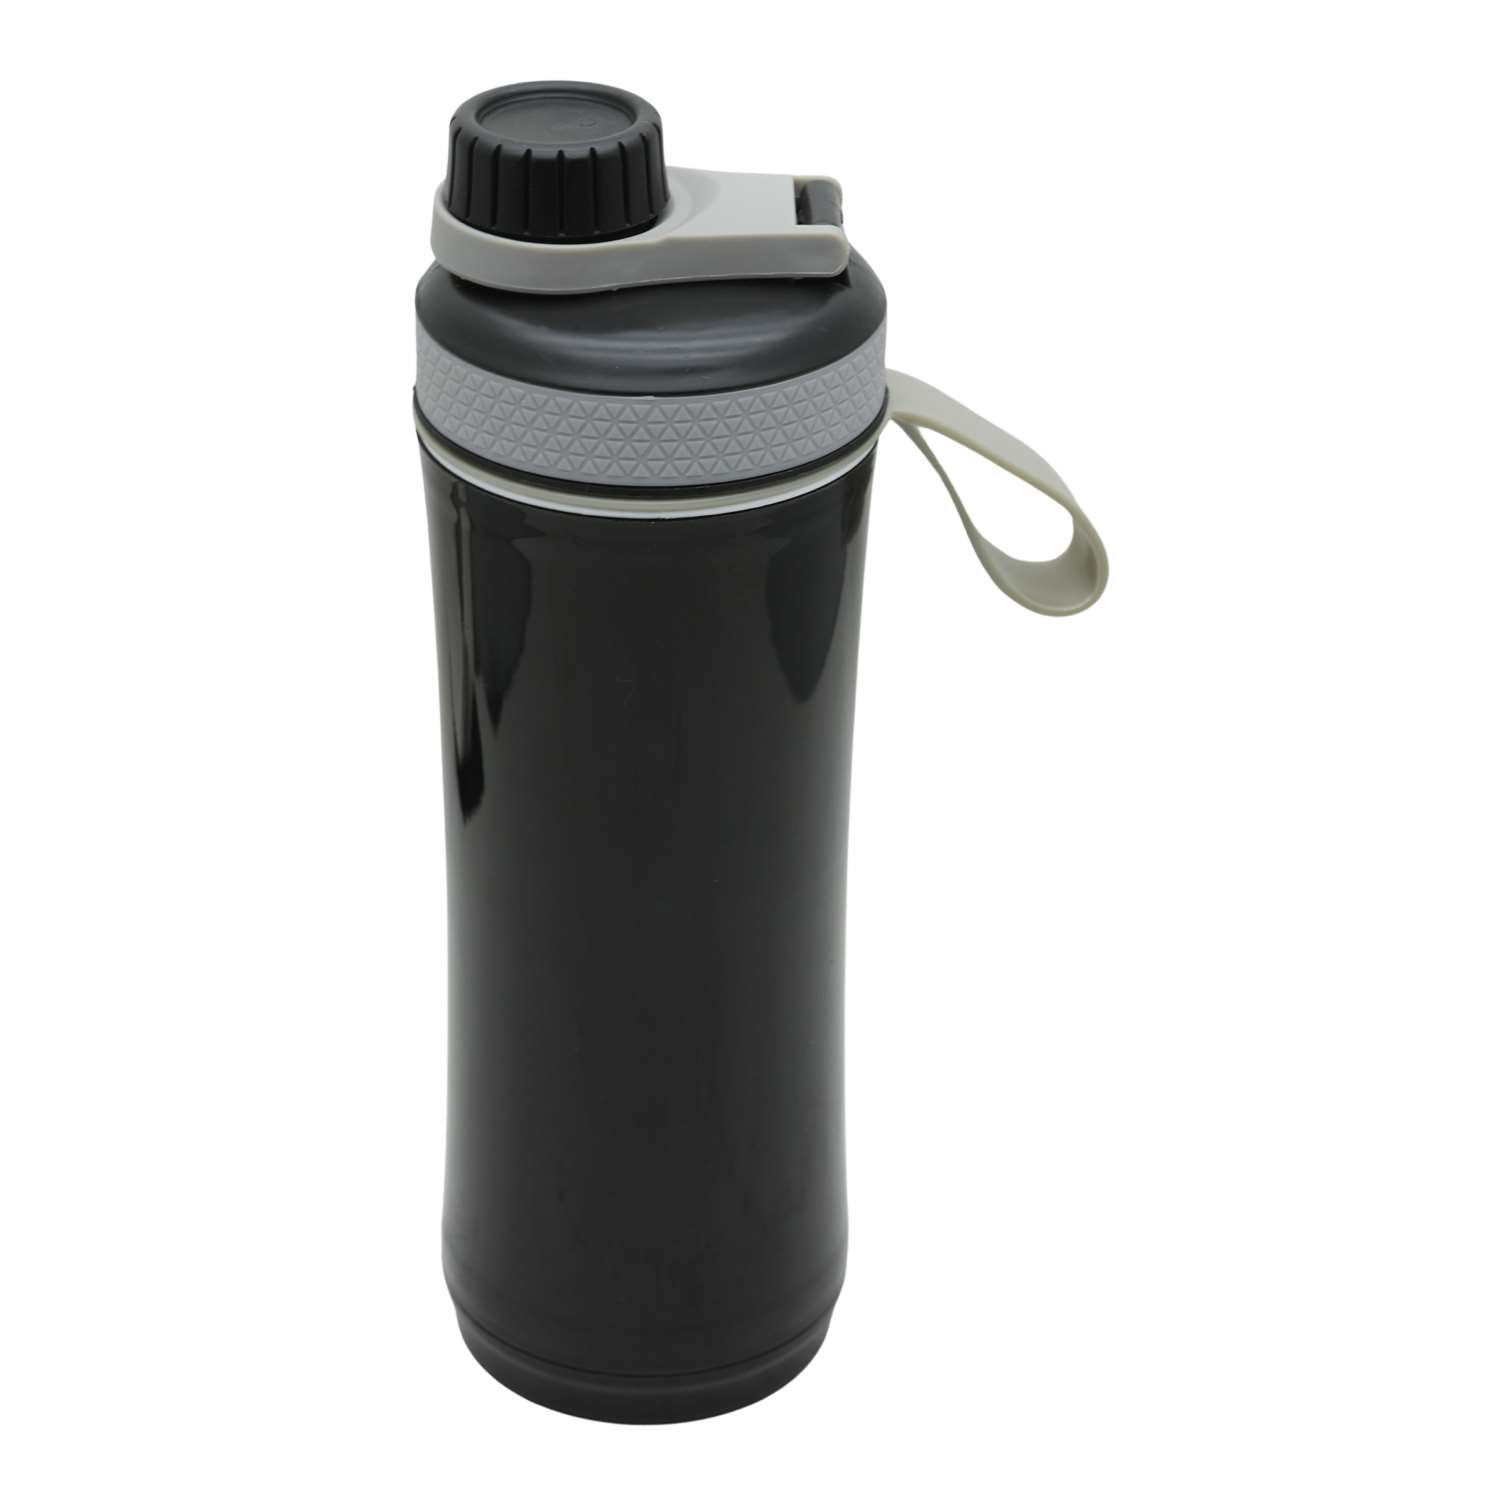 Selvel Cooltech Plastic Water Bottle Black 900Ml